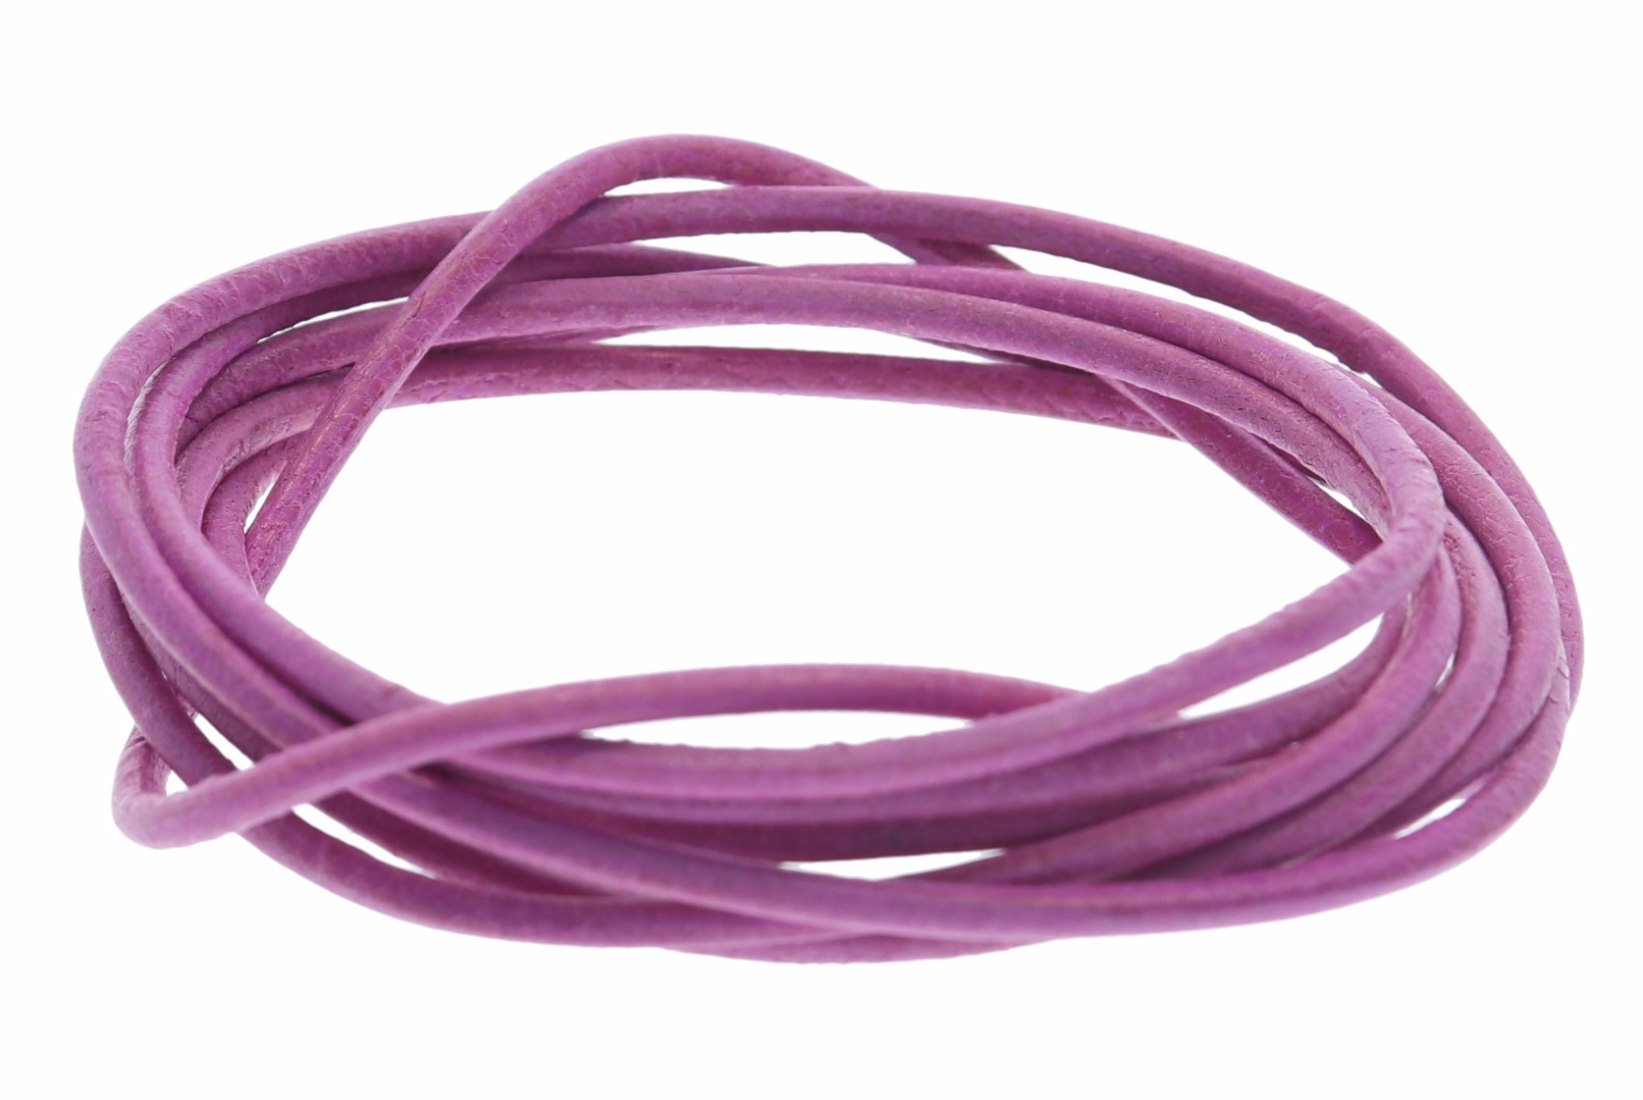 Lederband rosa -  Lederbänder Lederriemen Lederschnur 1.5mm Ø - 100cm L121